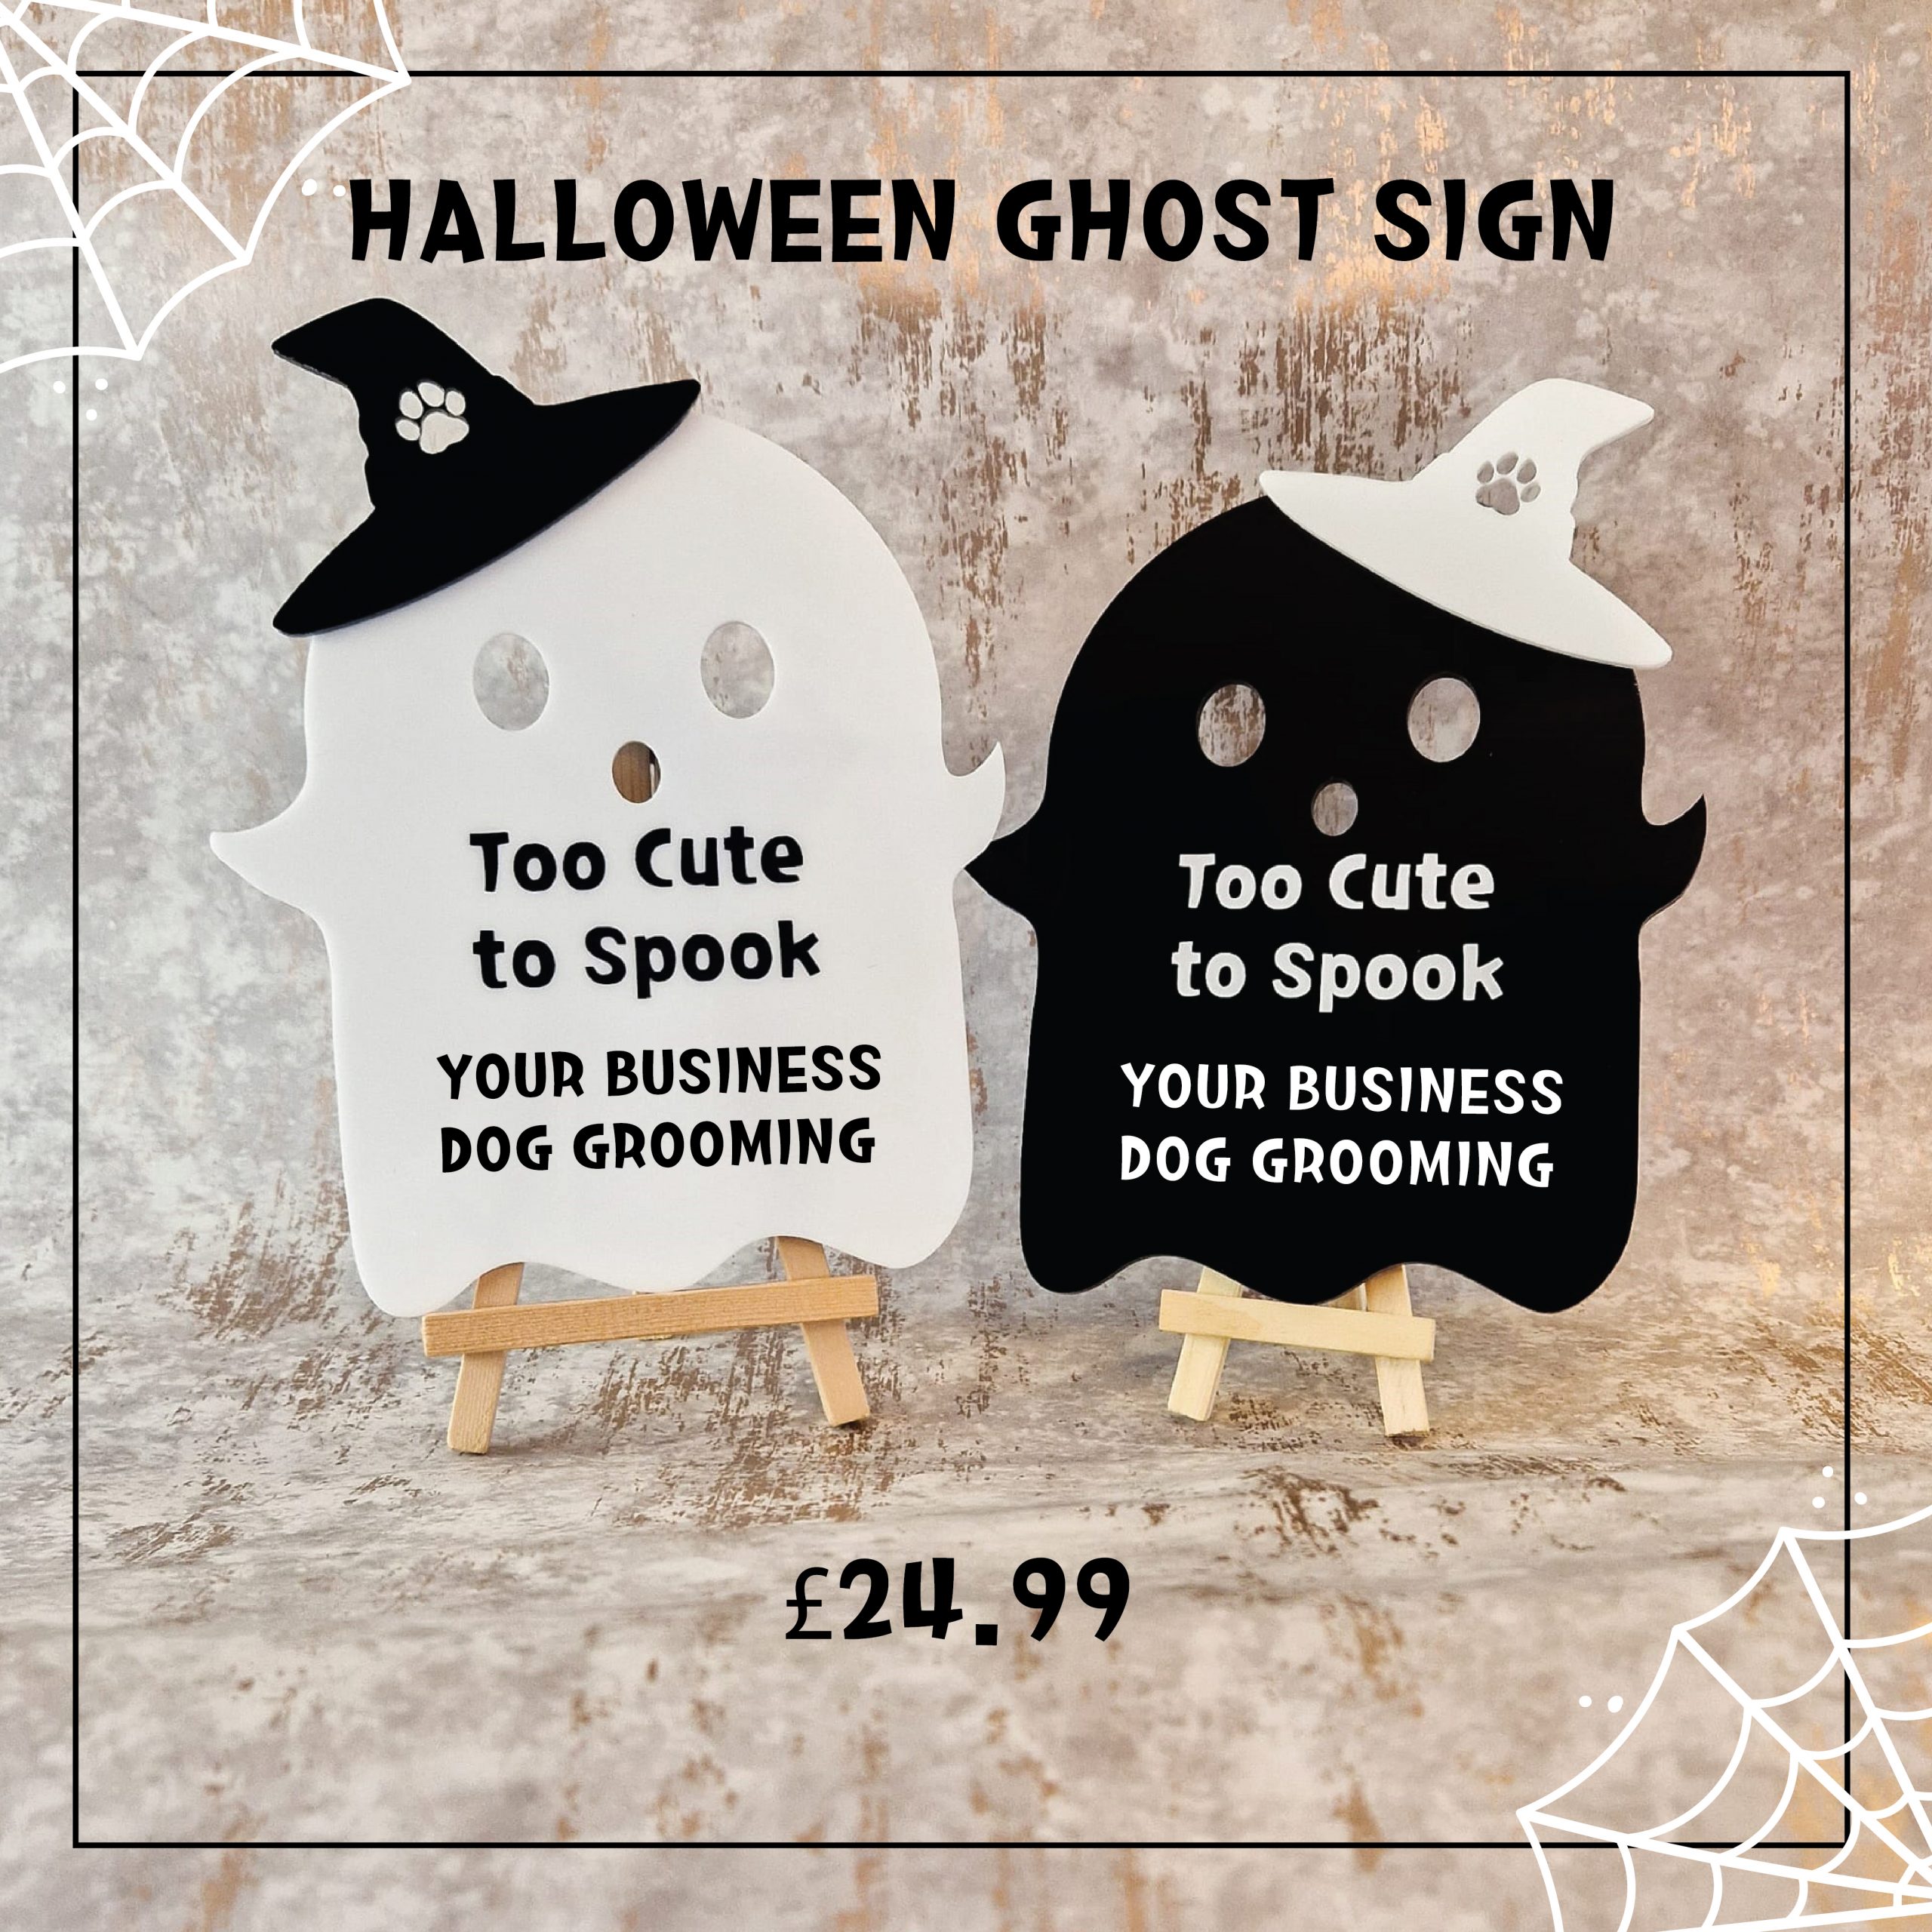 Halloween Ghost sign